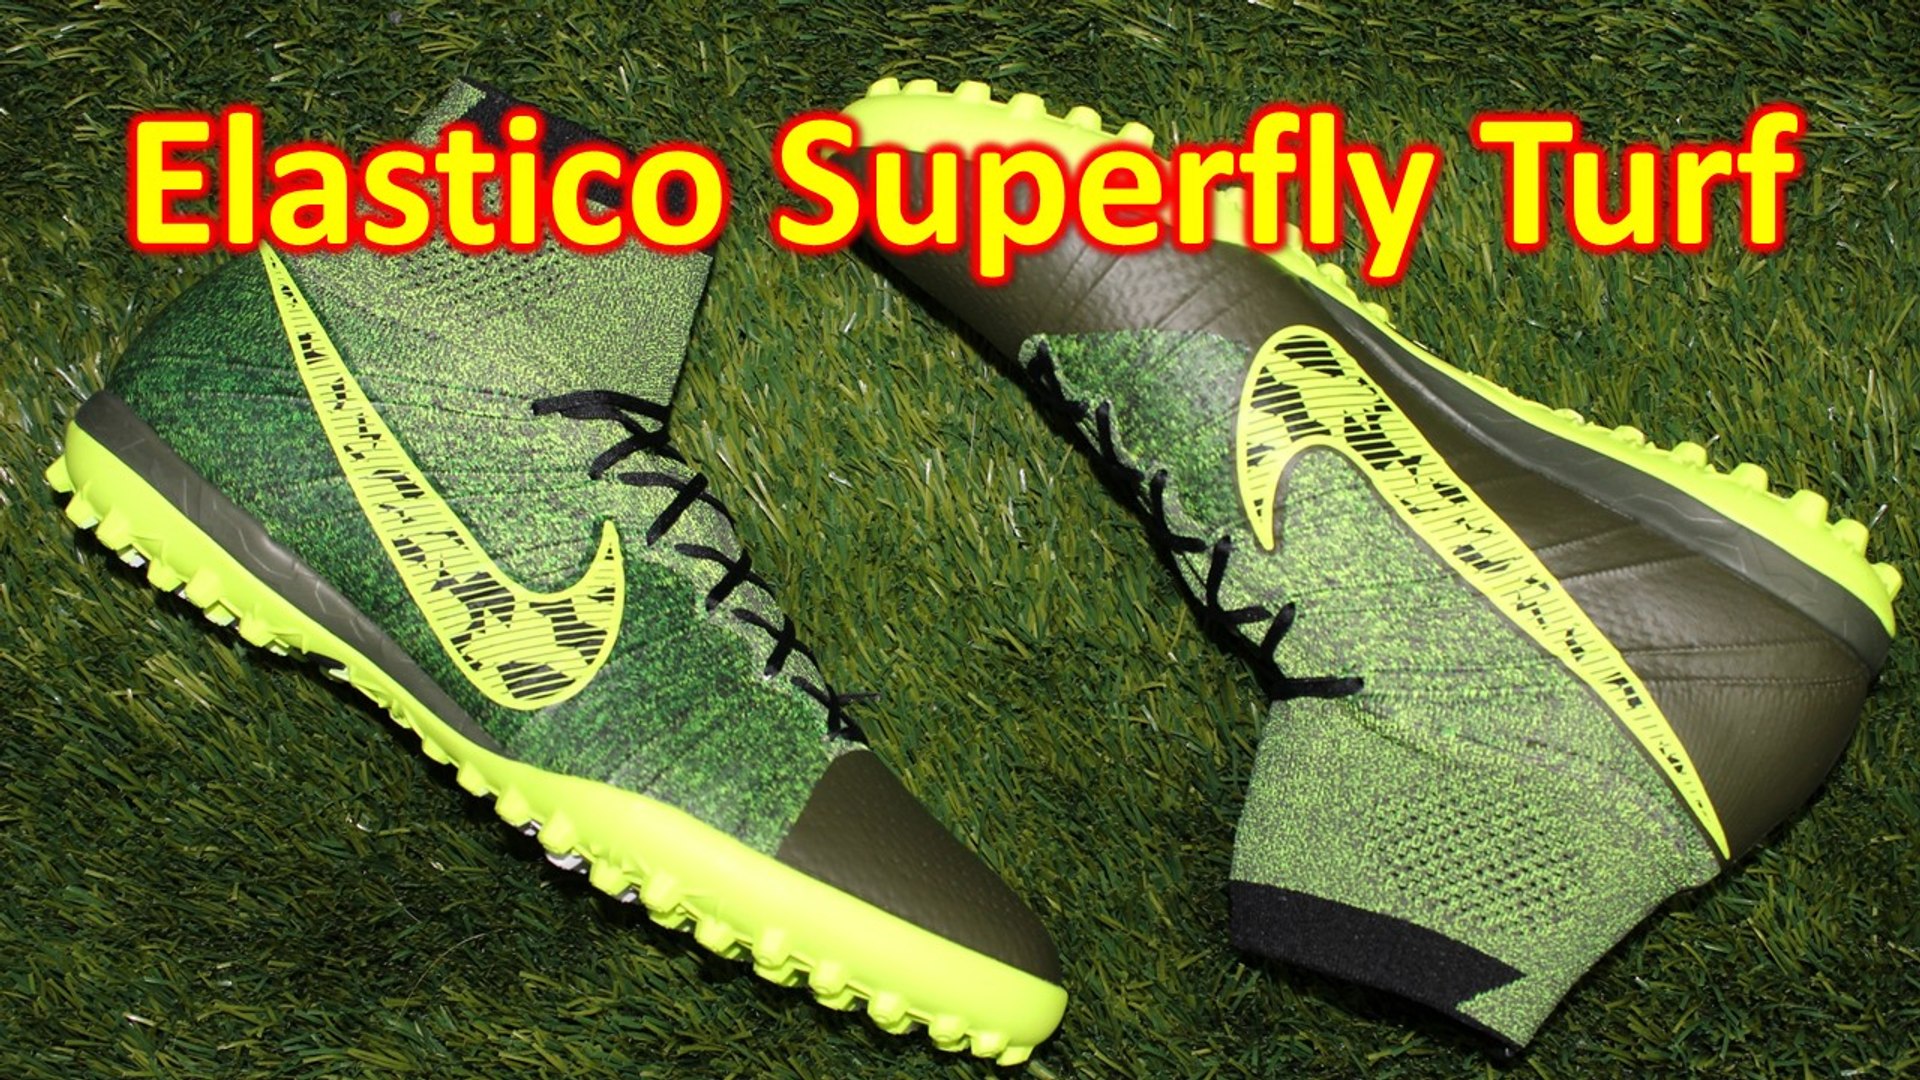 Nike Elastico Superfly Turf Midnight Fog/Volt - Unboxing & On Feet - video  Dailymotion